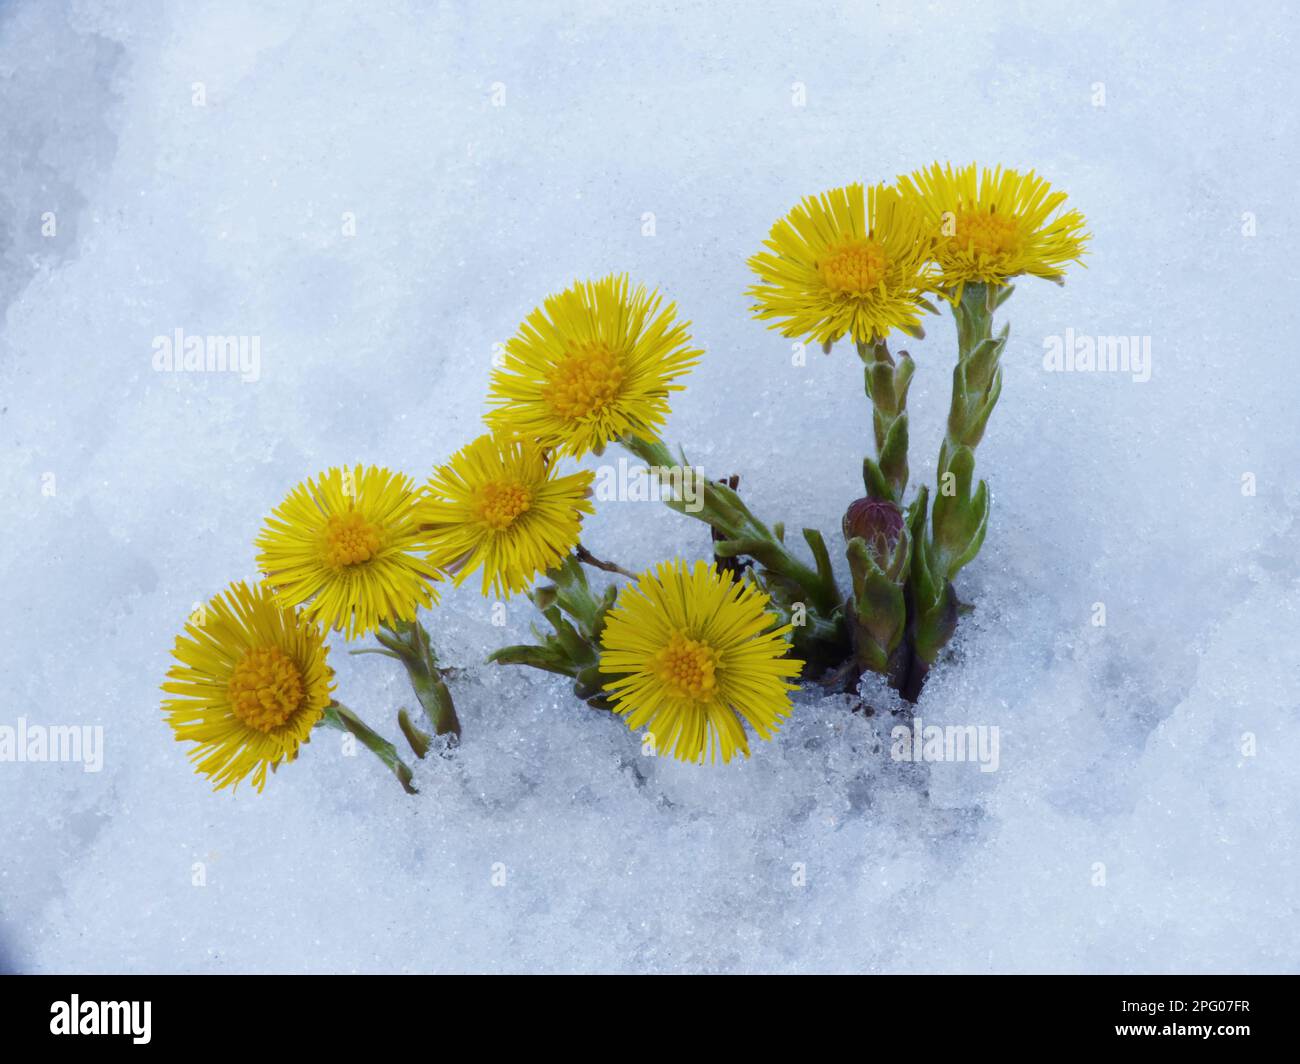 Flowering coltsfoot (Tussilago farfara), emerging through fresh snow, Cannobina Valley, Italian Alps, Piedmont, Italy Stock Photo